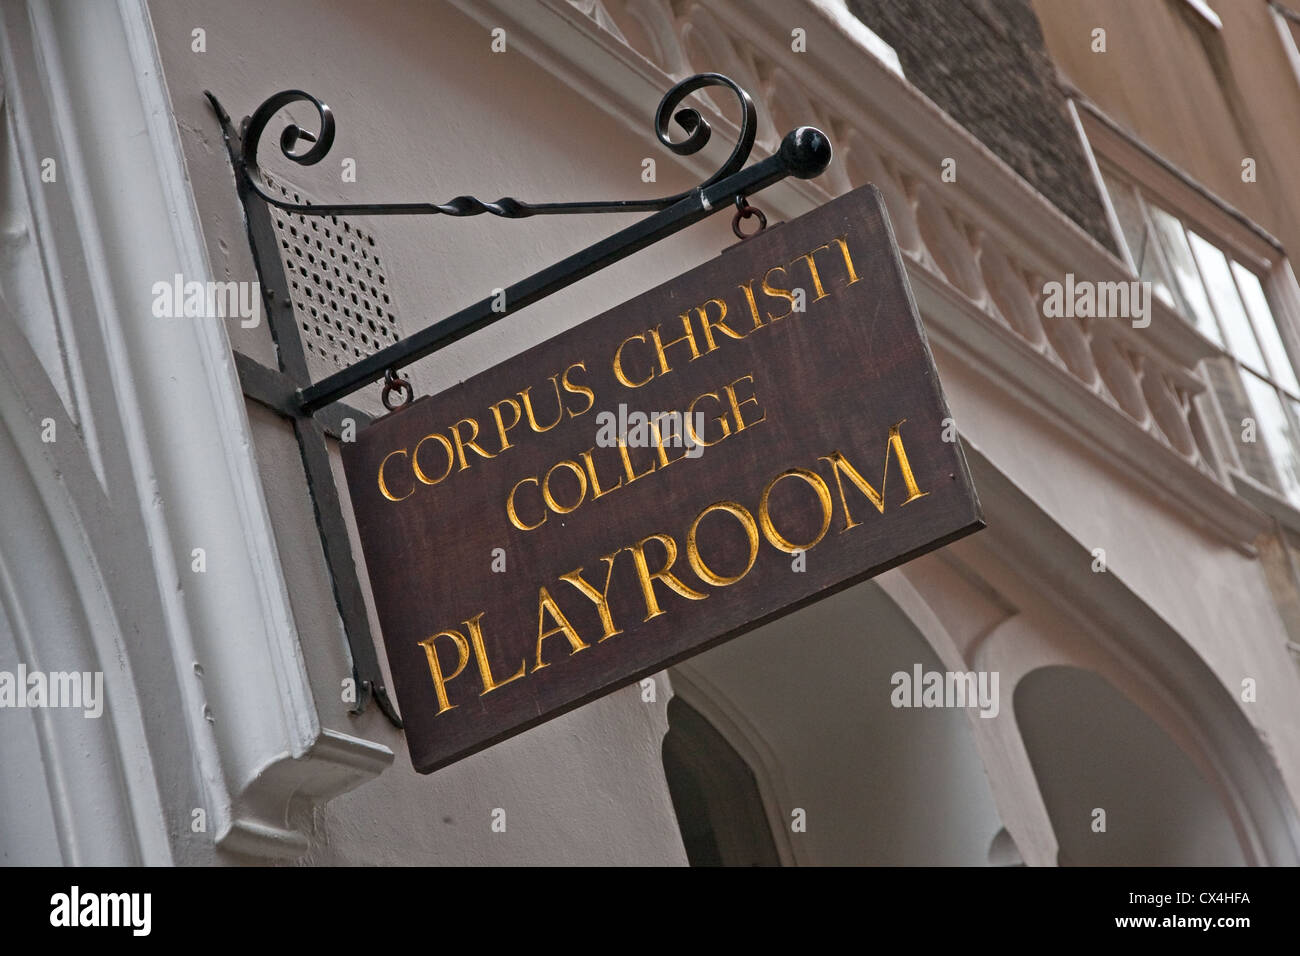 Sign outside Corpus Christi College Playroom, Cambridge Stock Photo